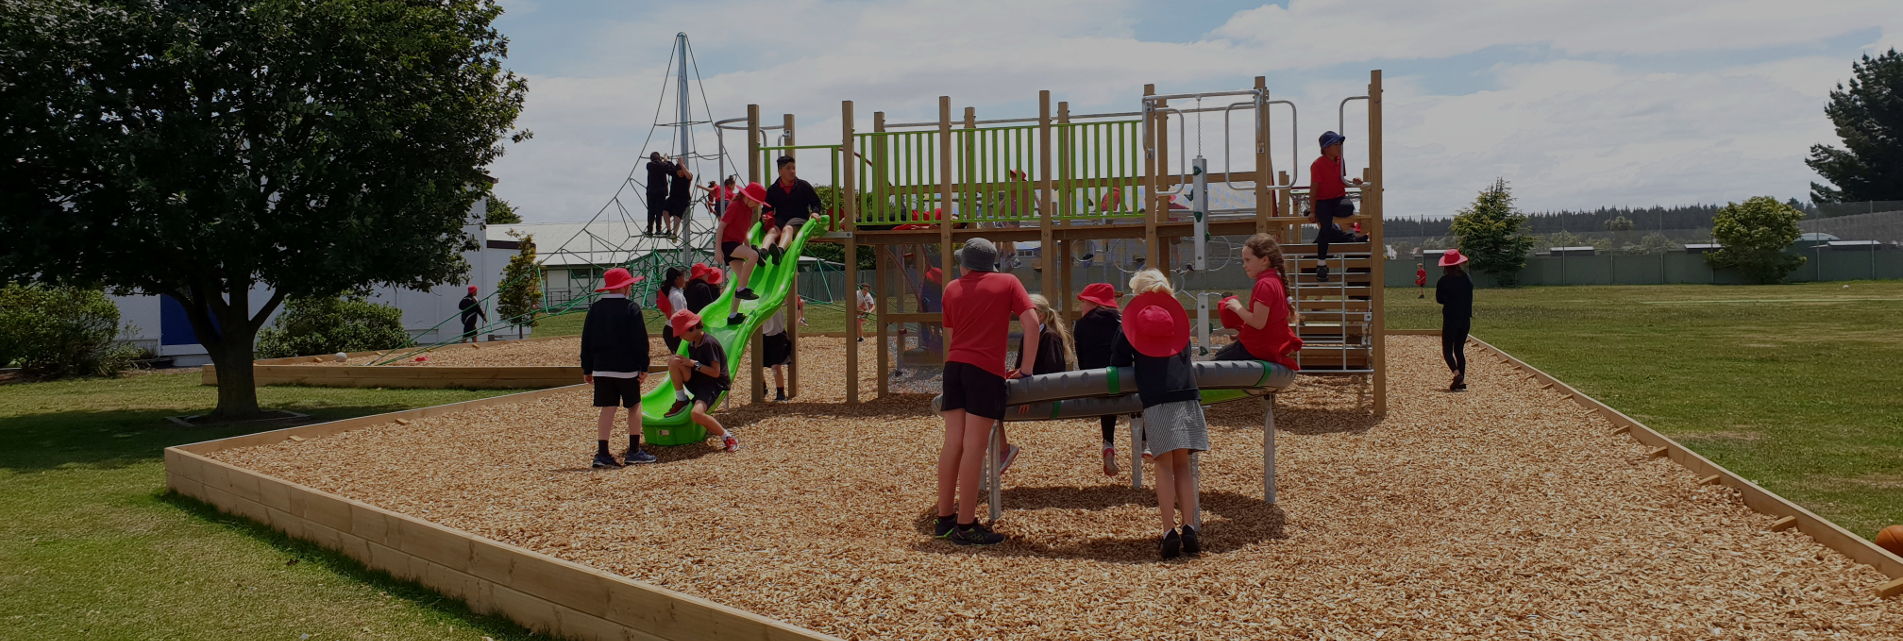 Outdoor Playground Equipment | Case Study | Playground People